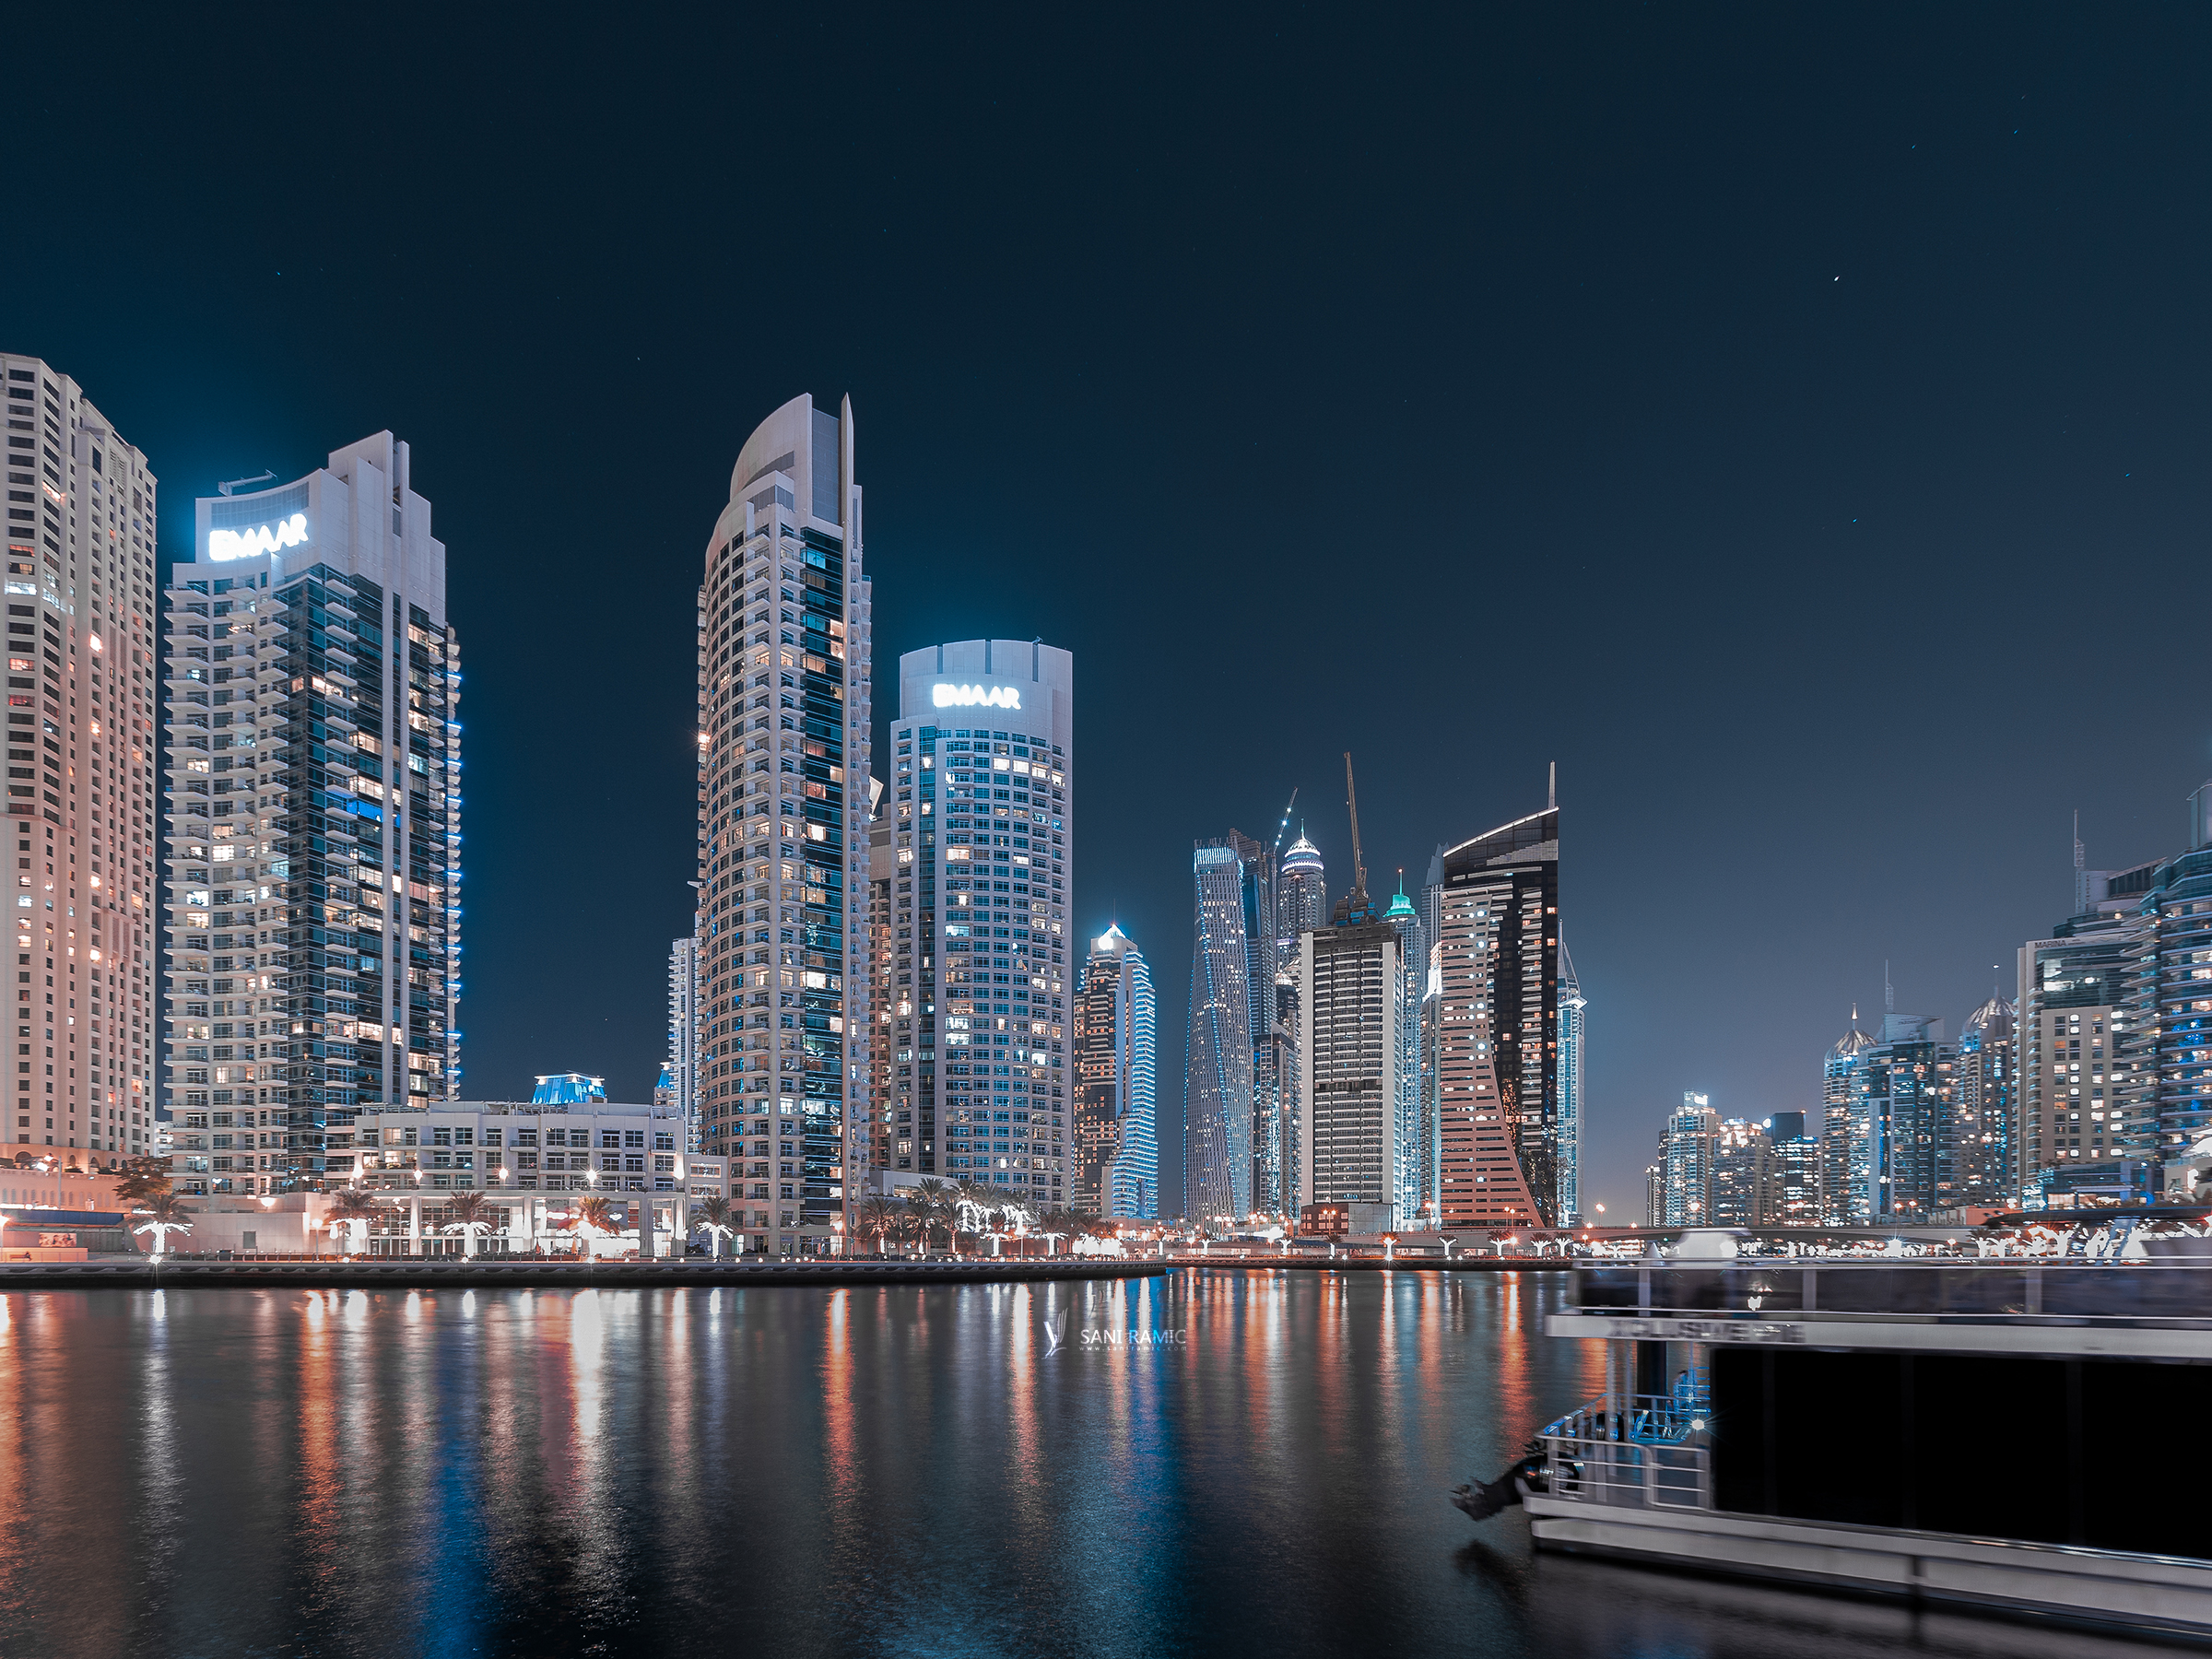 Dubai Marina cityscape